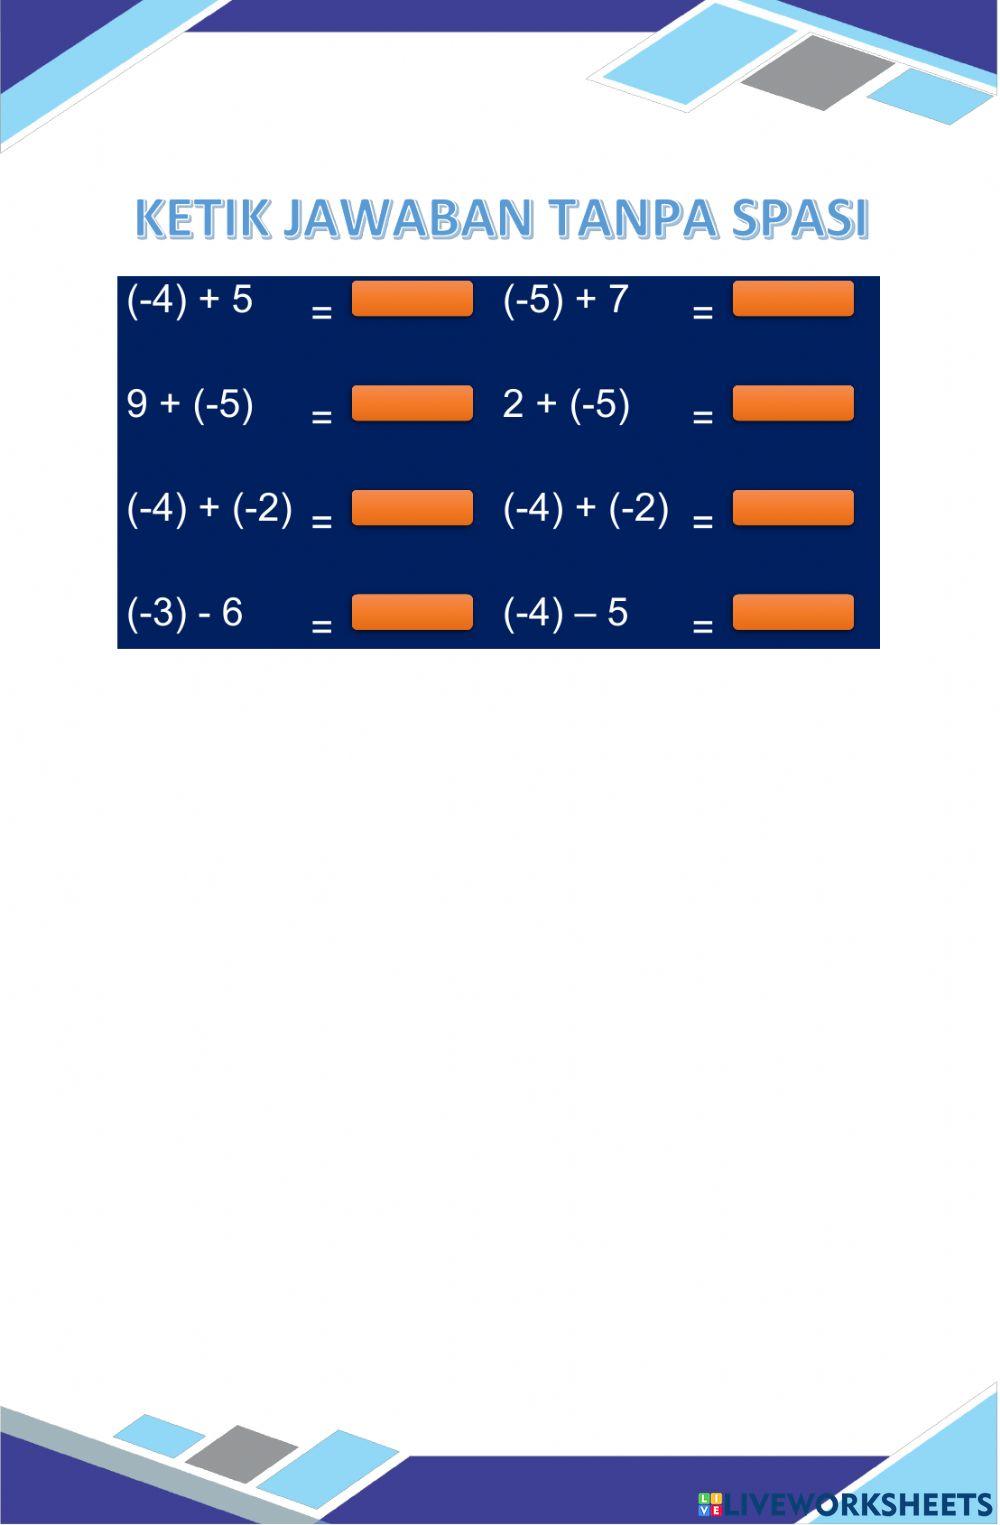 Kalimat Penjumlahan dan pengurangan Matematika dari Garis Bilangan Bulat